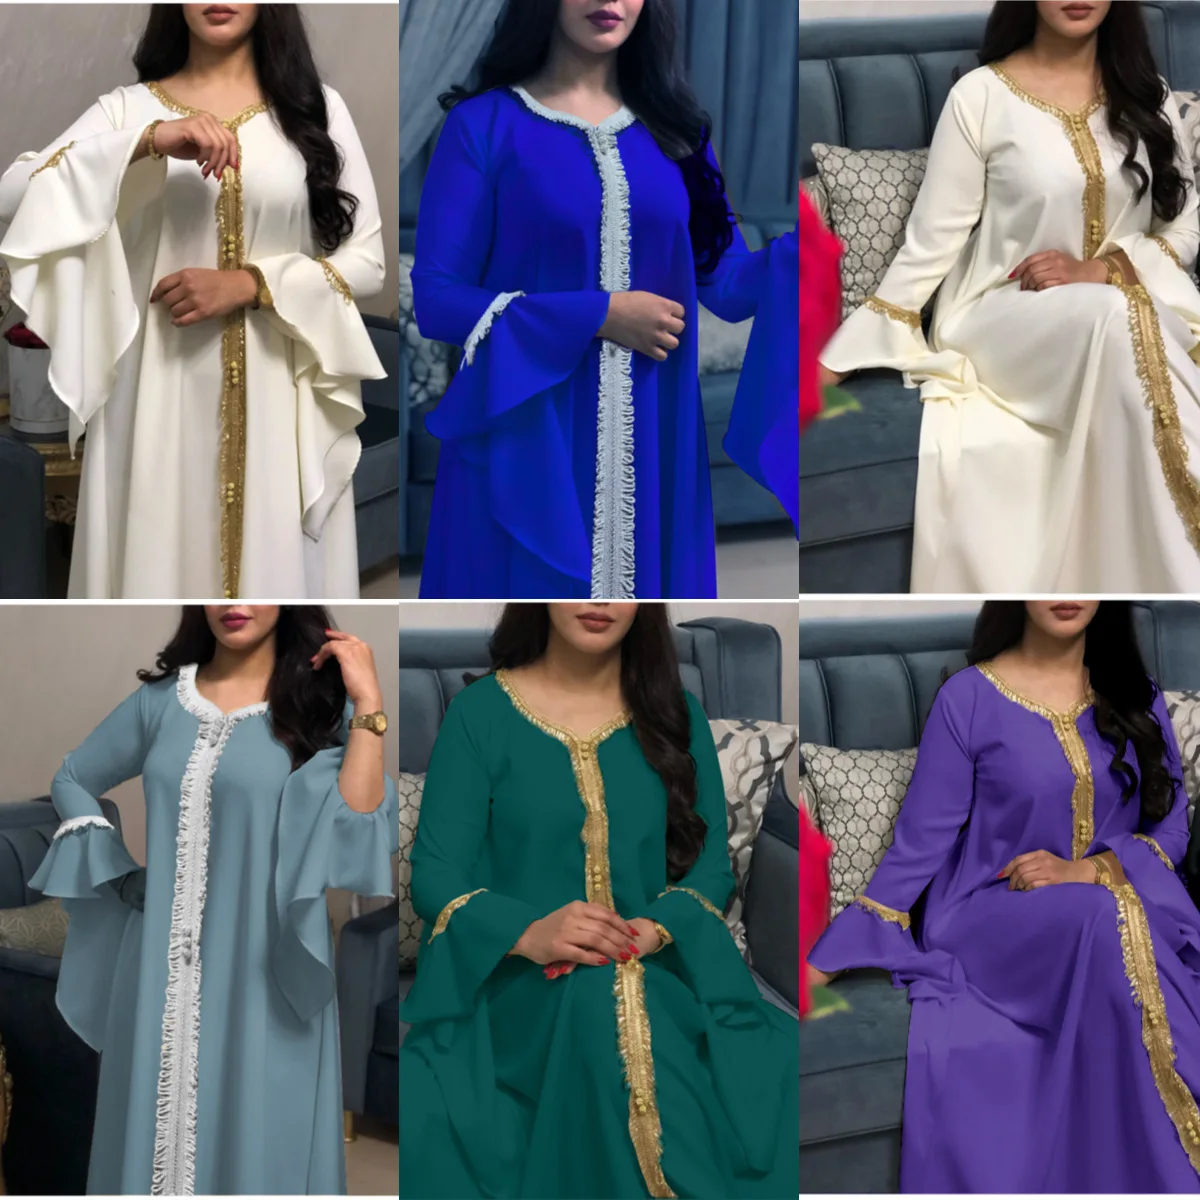 Jalabiya kaftan dress white 2021 women dubai turkey golden ribbon embroidery loose muslim arabic islamic clothing